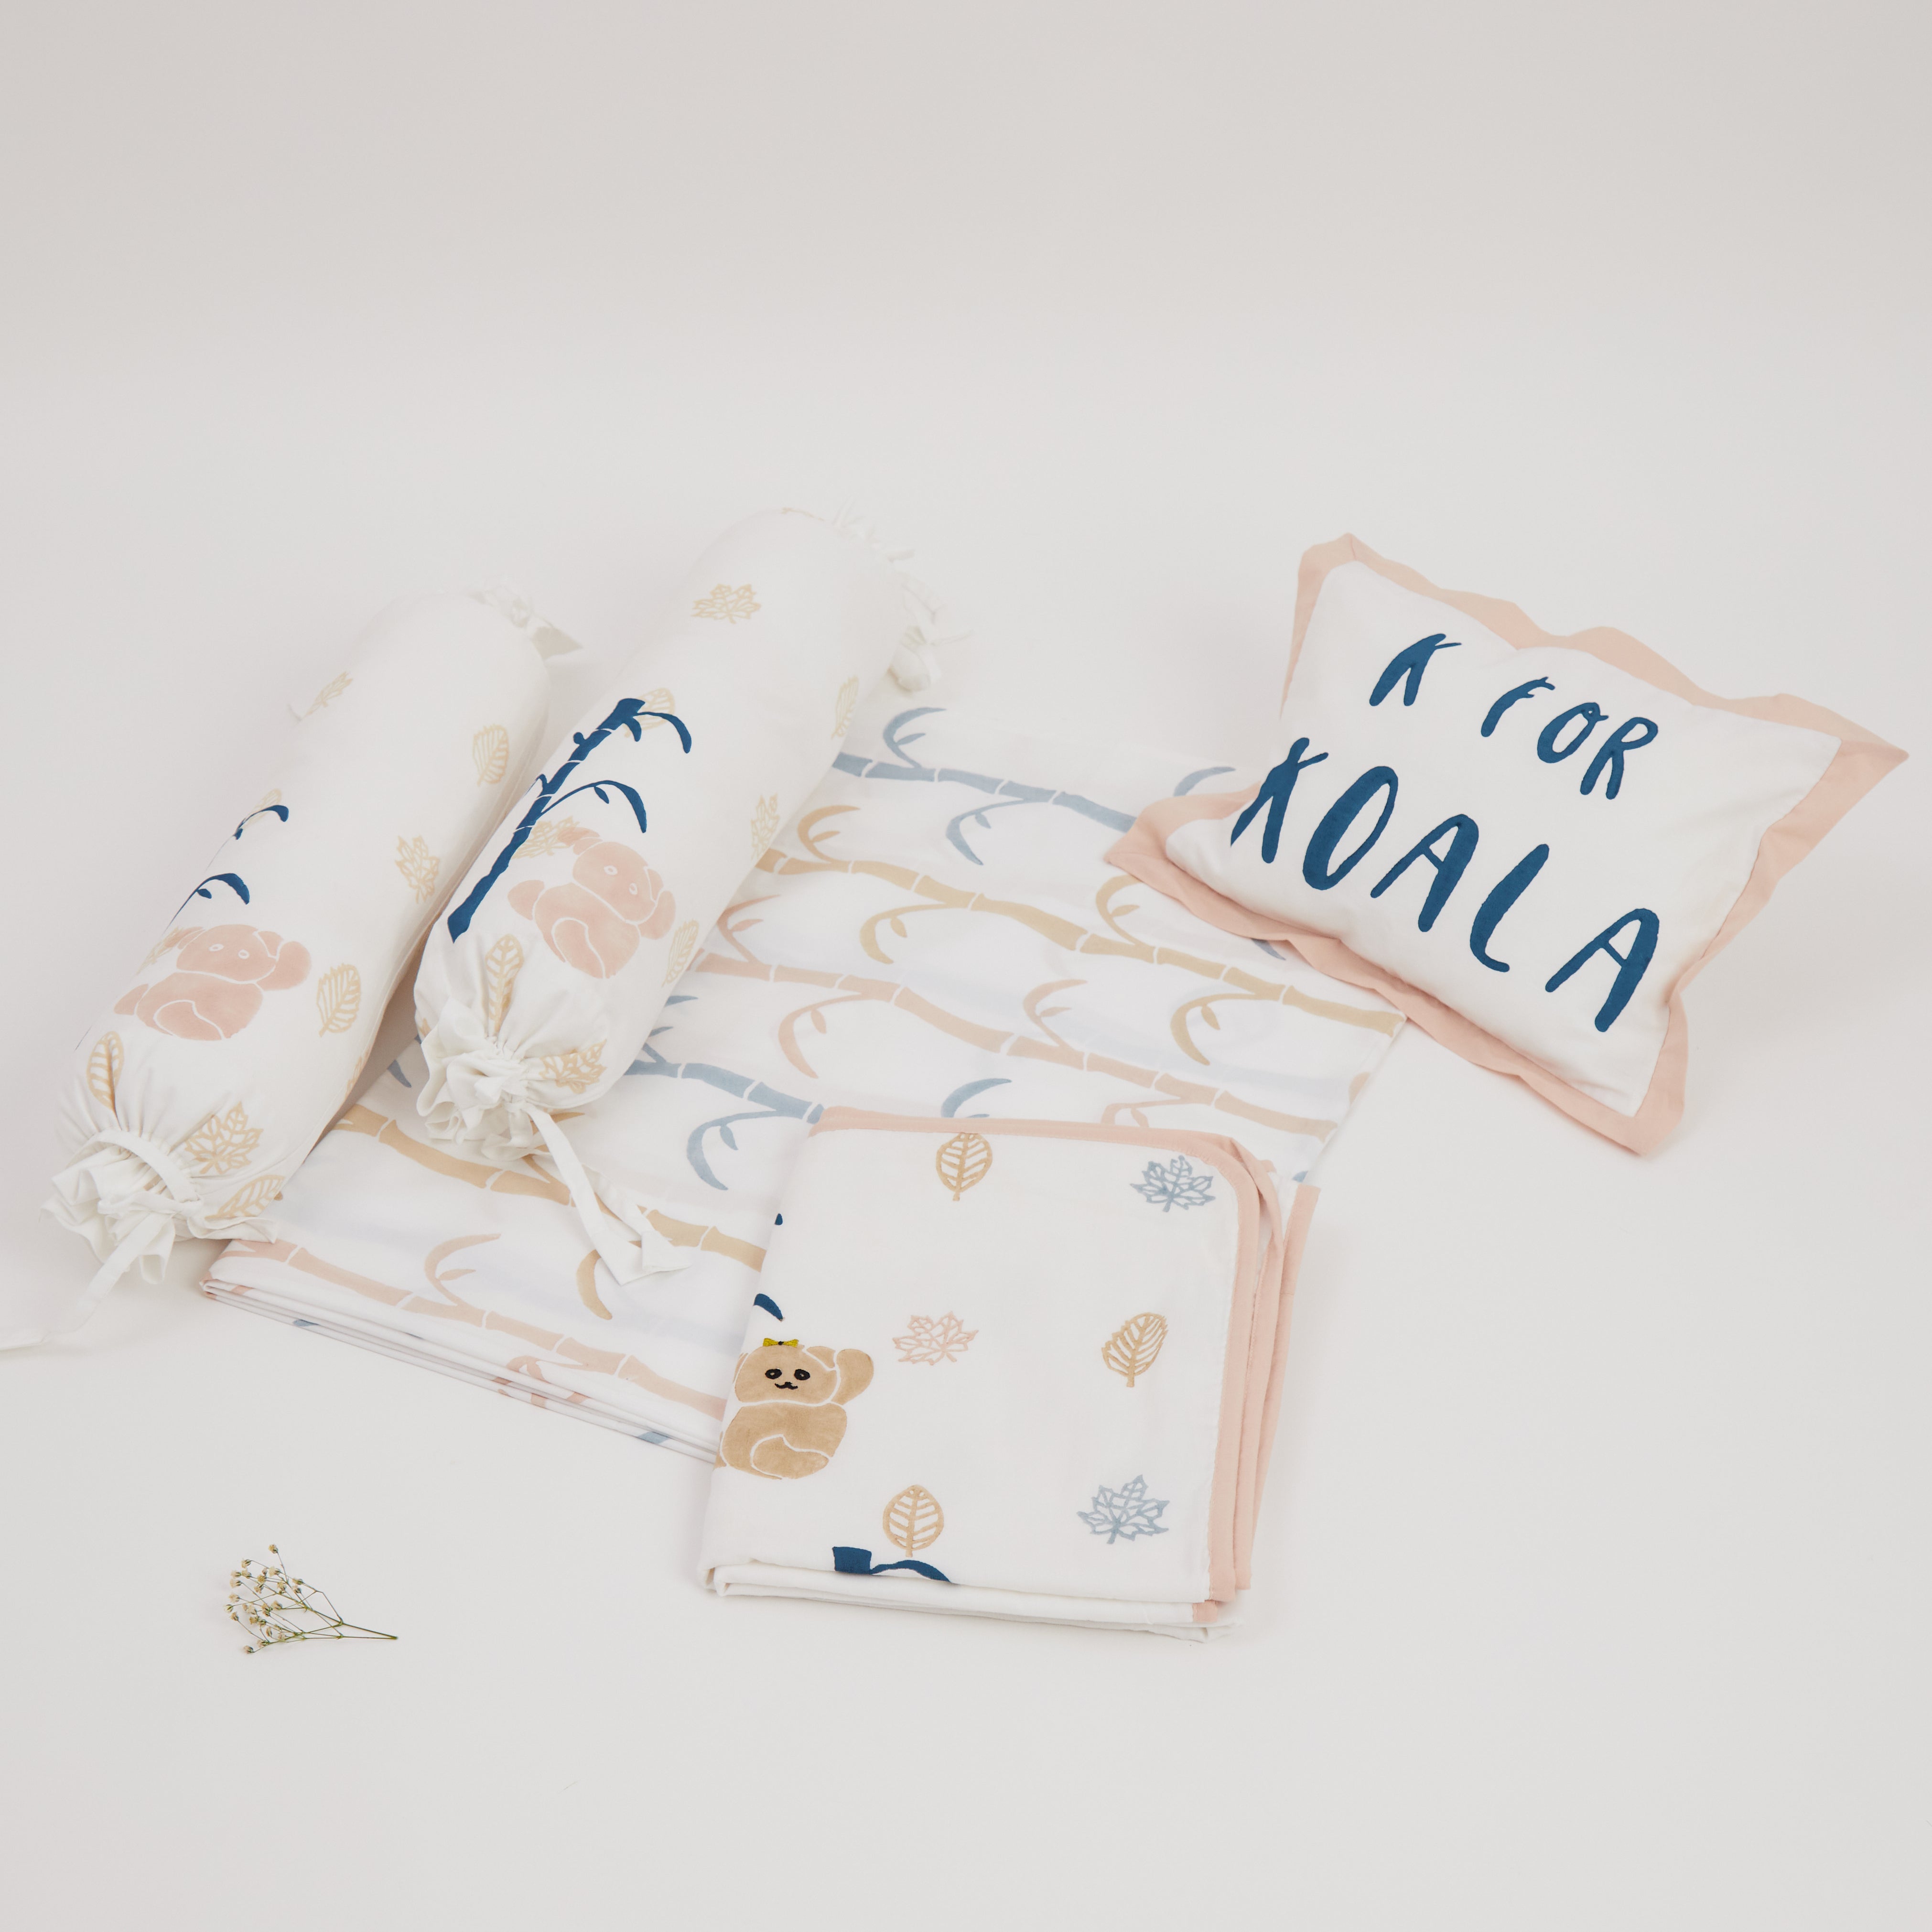 Masaya Cot Bedding Set- K for Koala - Beige